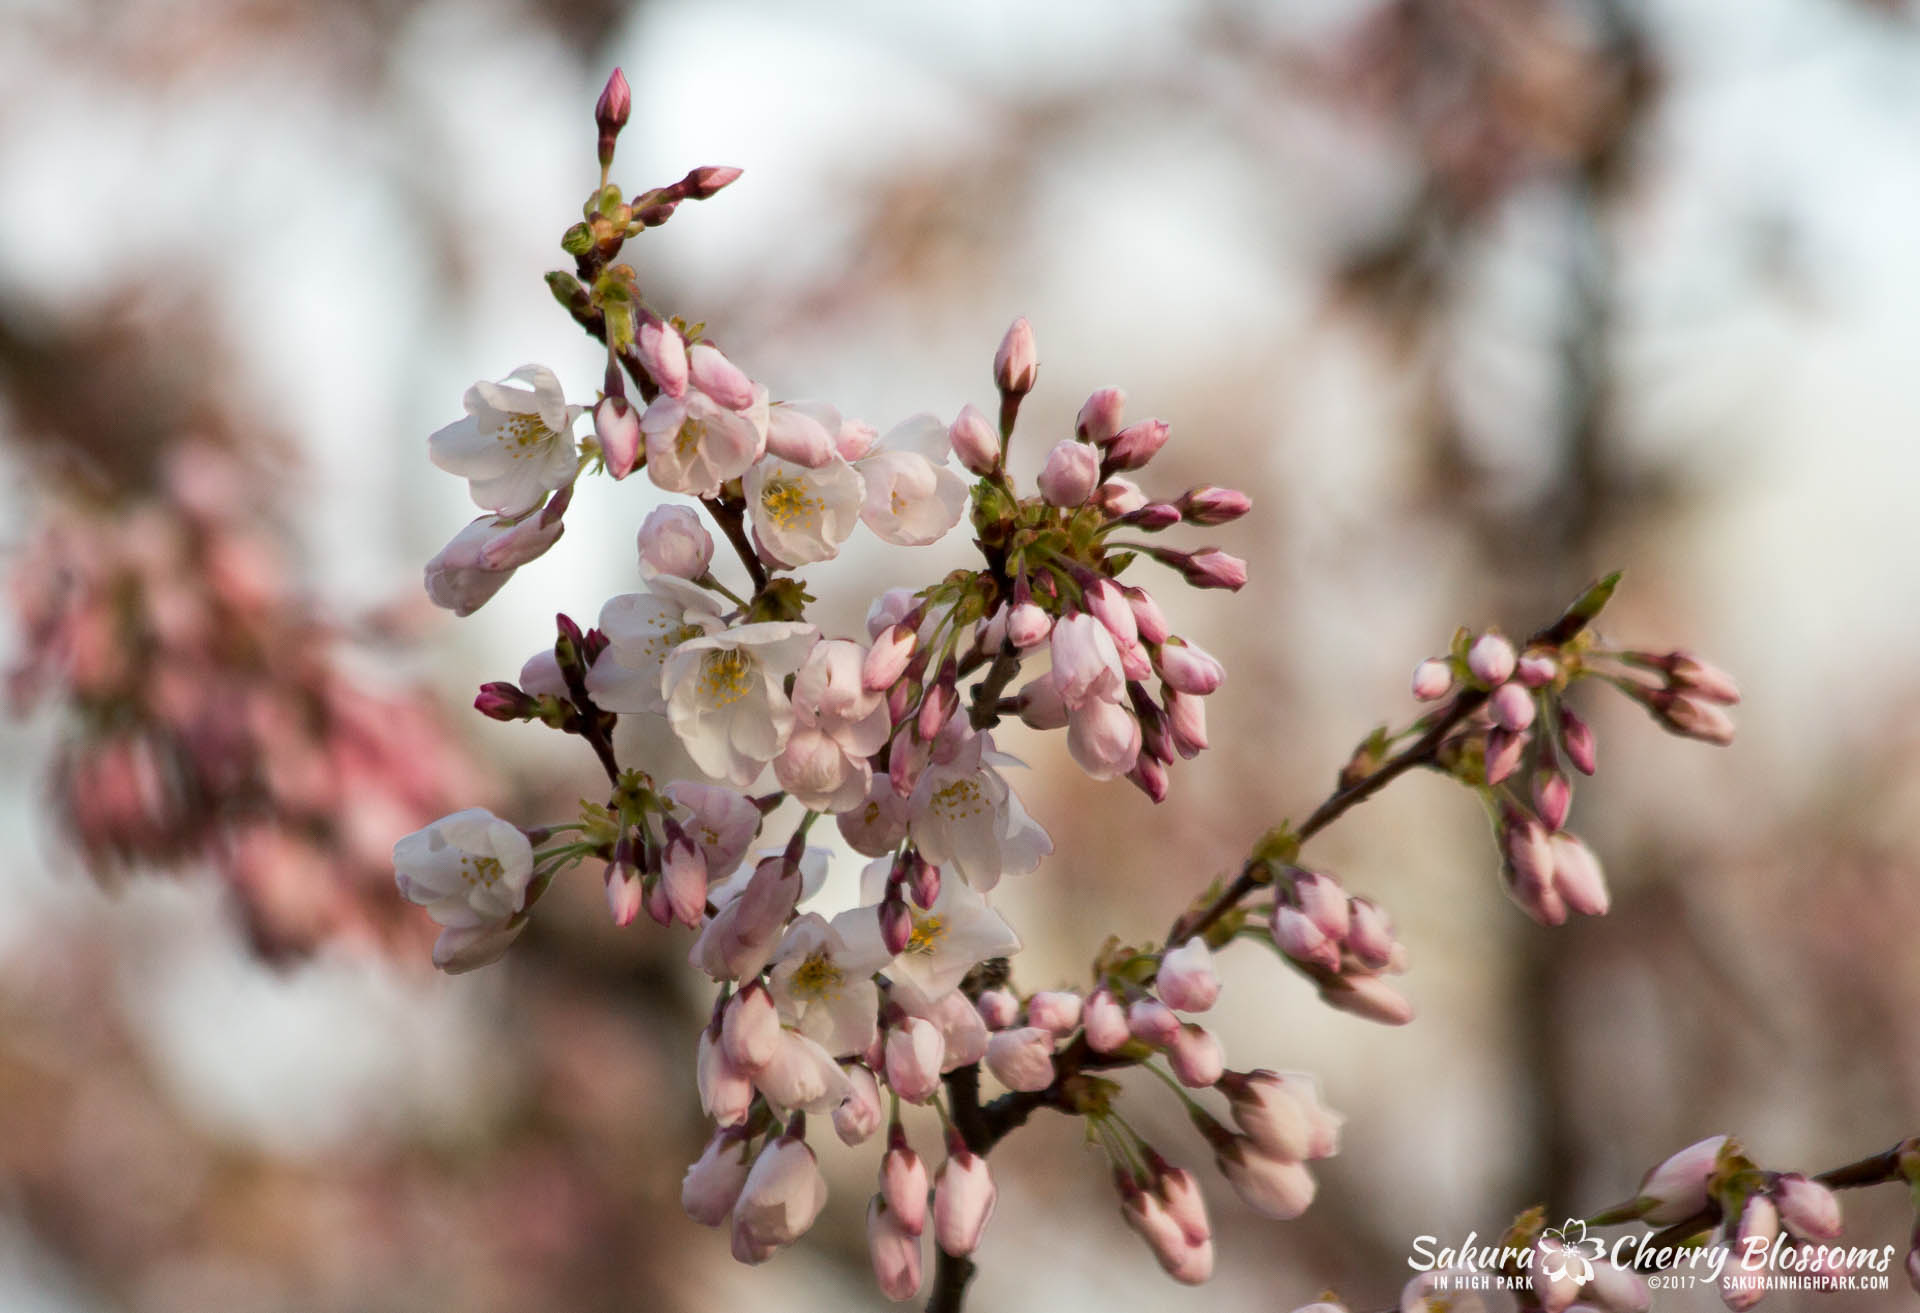 Sakura-Watch-April-24-2017-bloom-has-begun-with-more-to-come-43.jpg